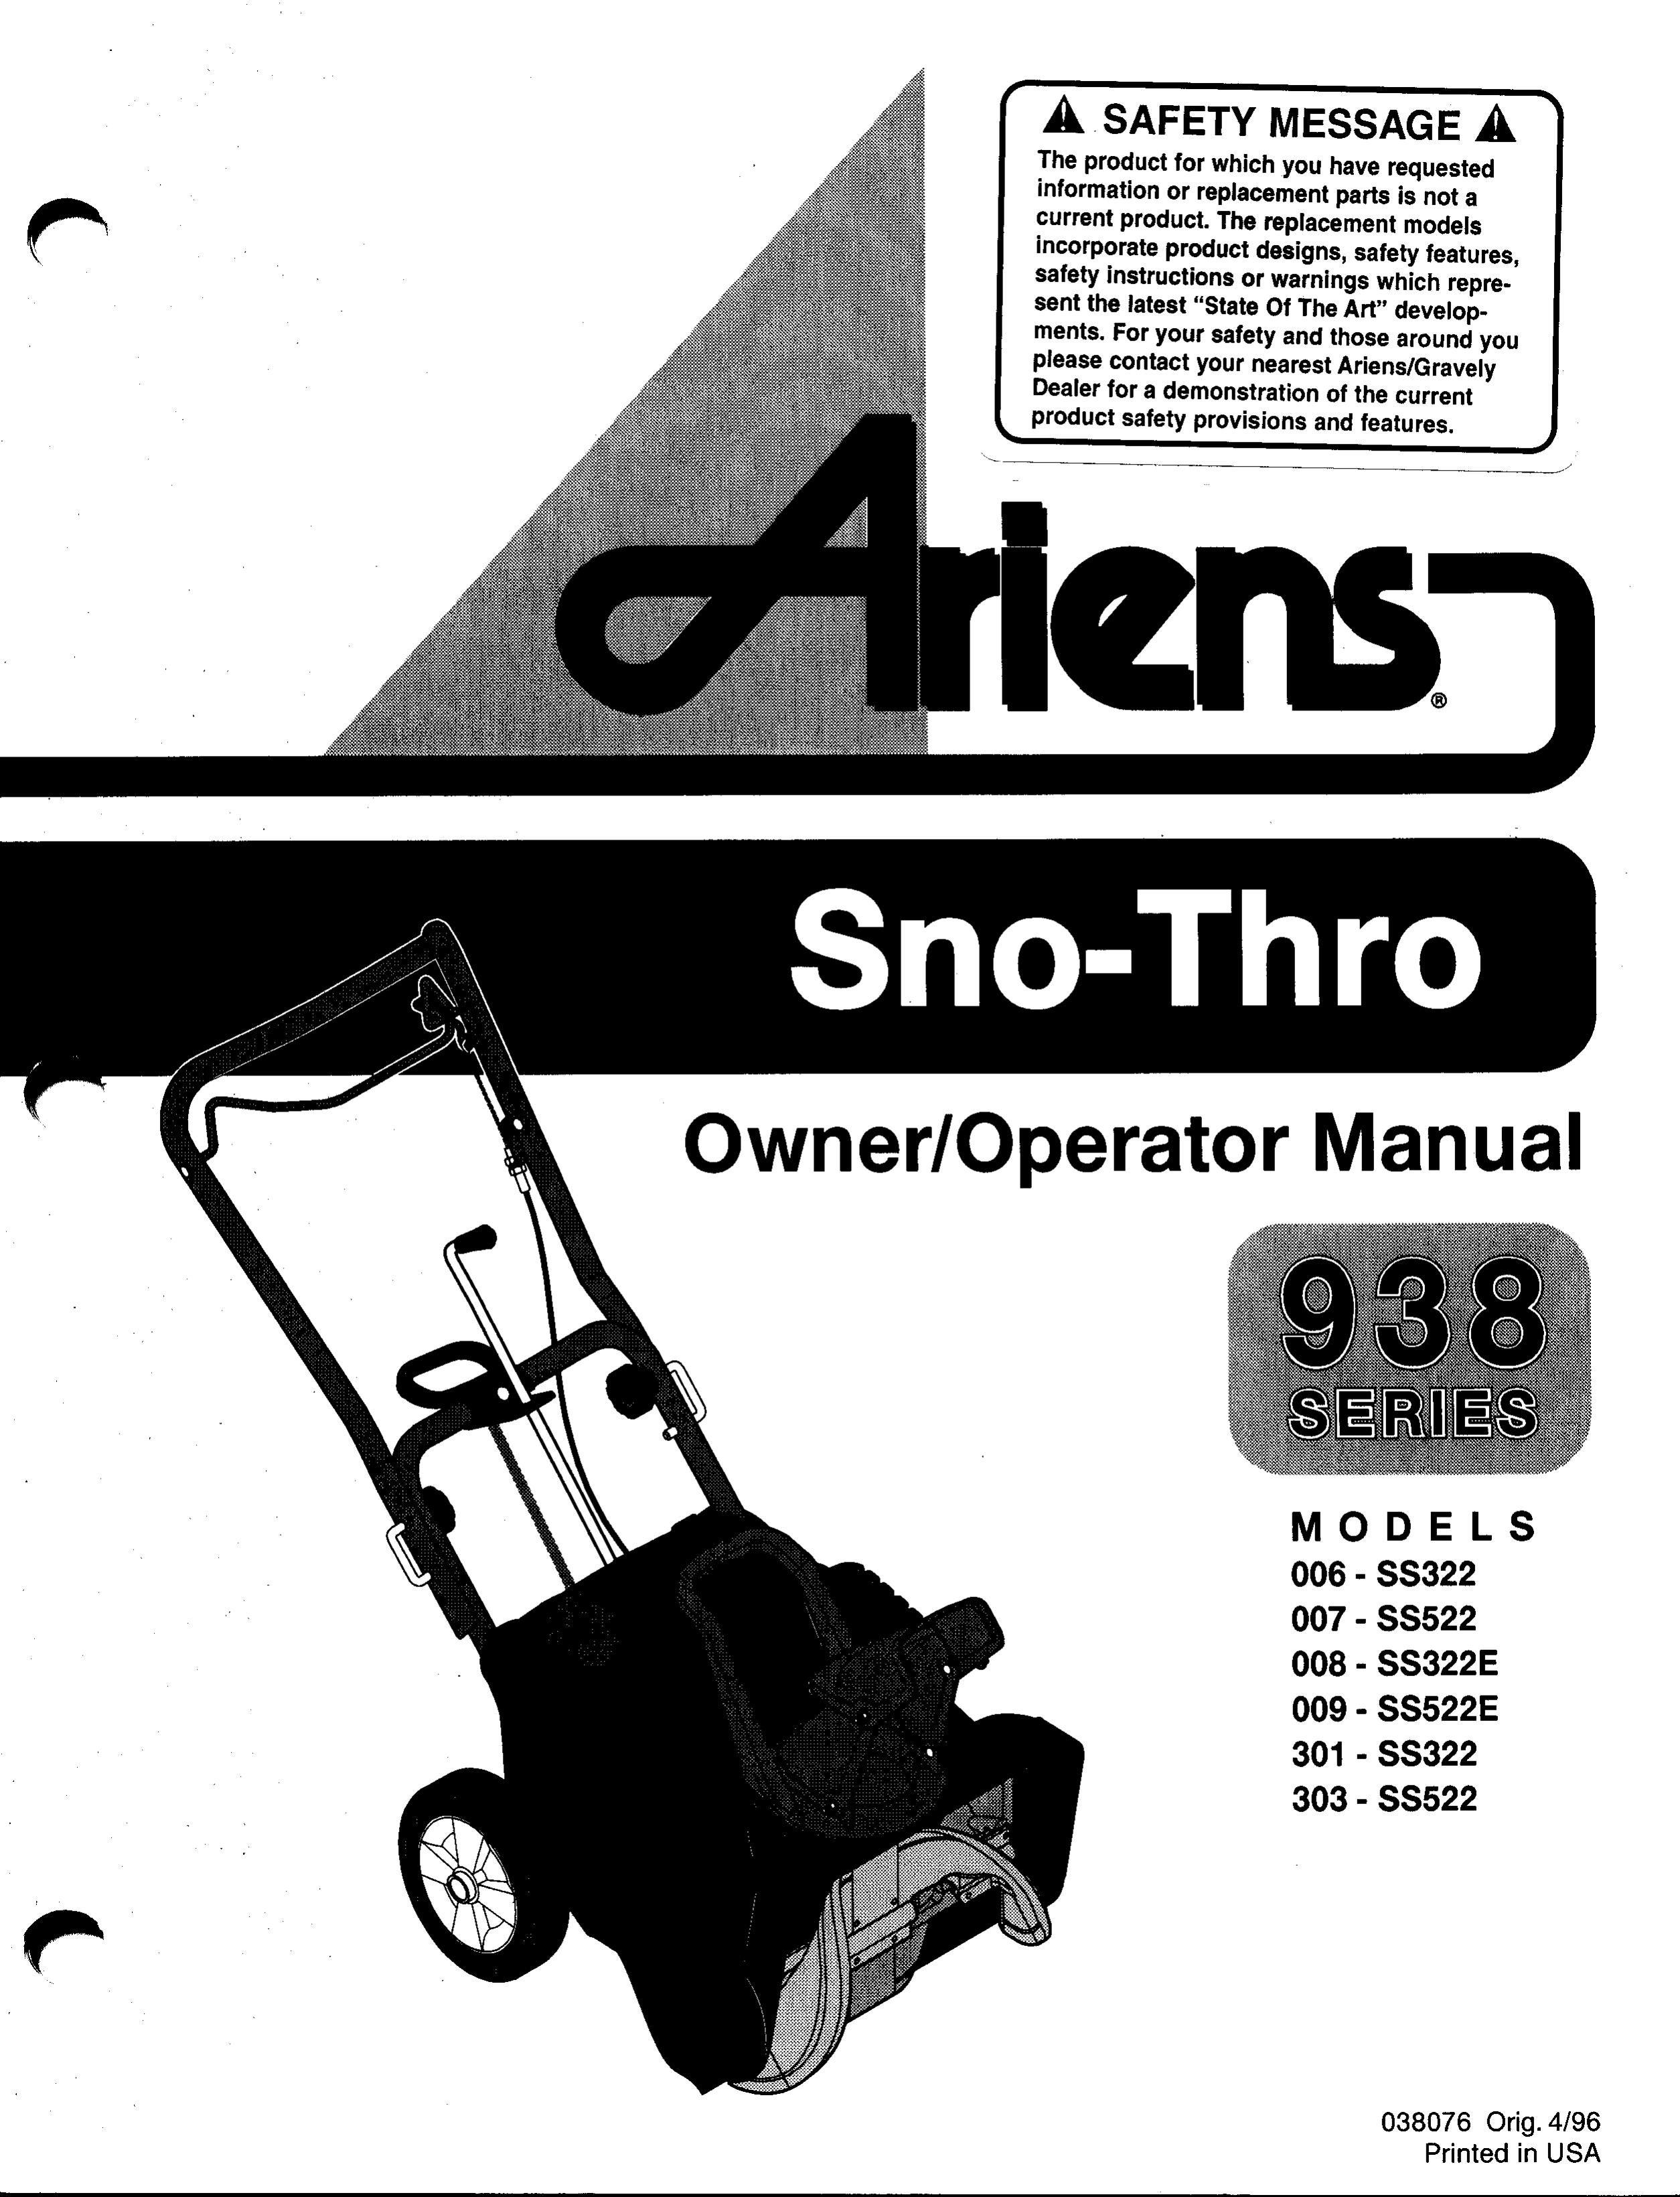 Ariens 301-SS322 Snow Blower User Manual